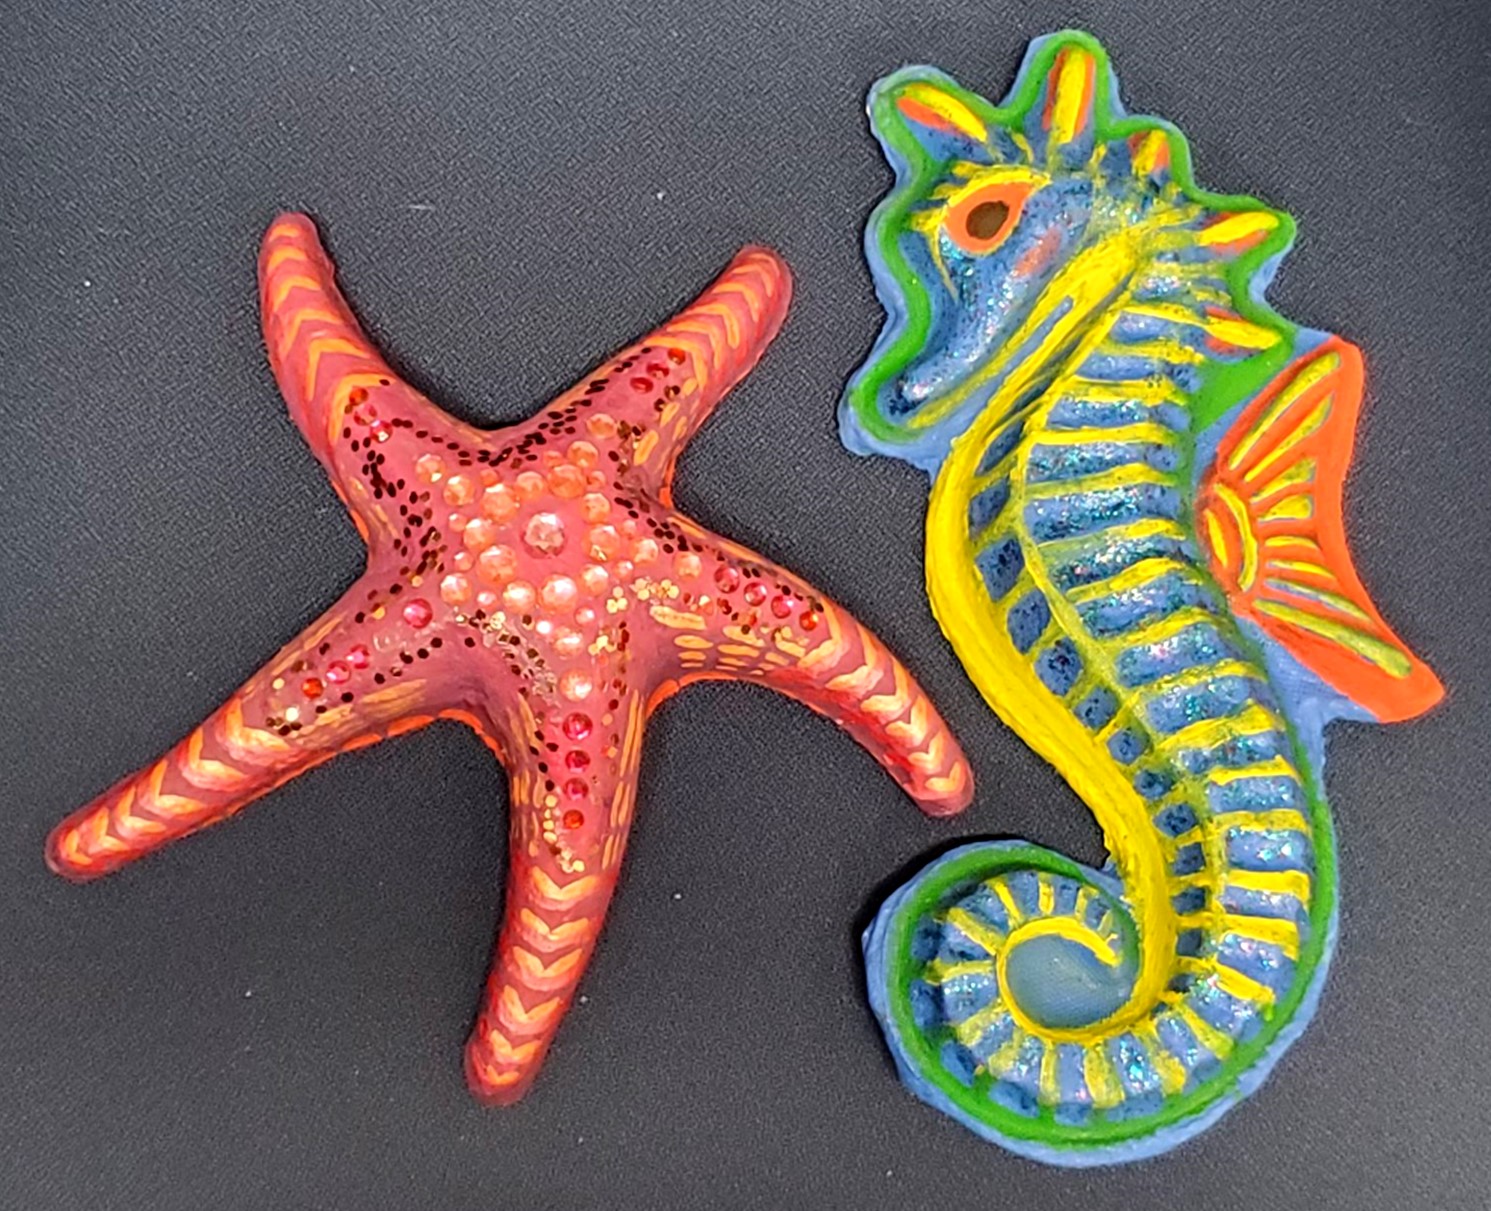 painted paper mache sea creatures